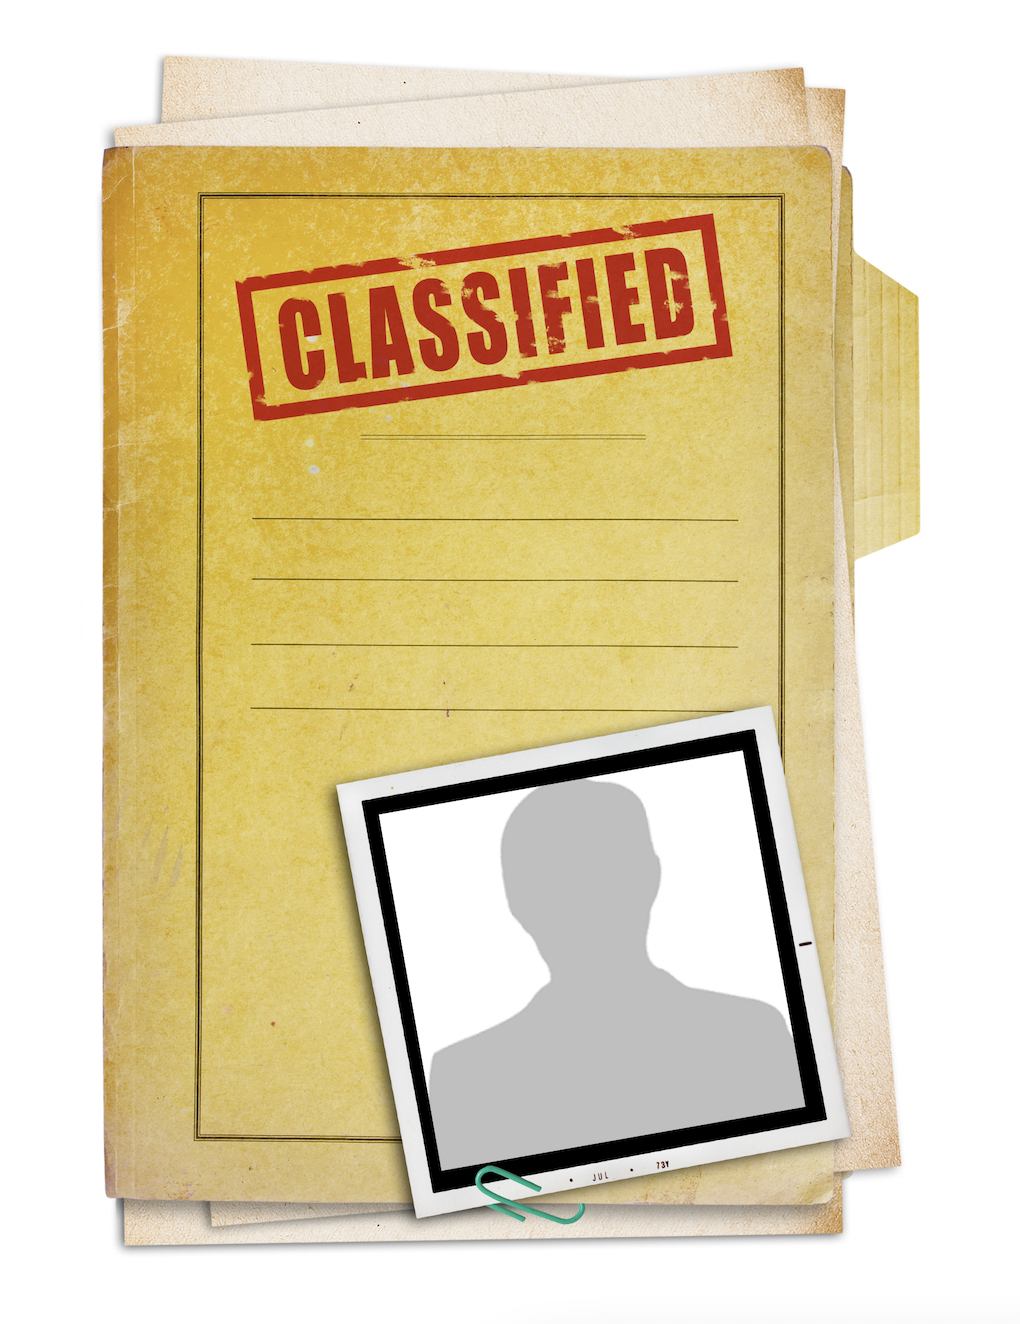 Manilla folder that says Classified